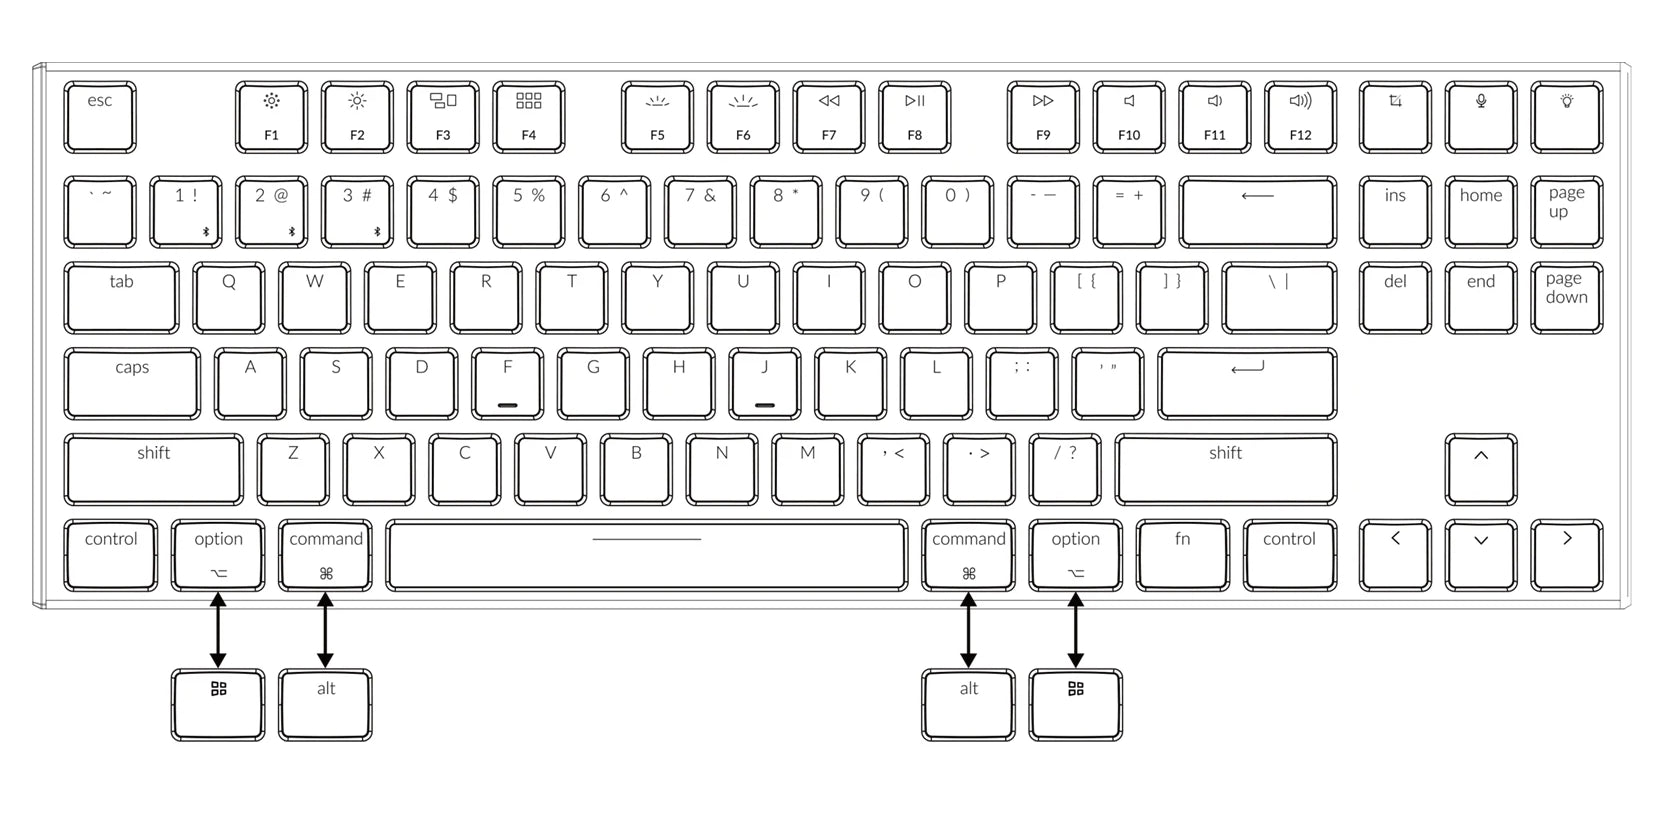 Keychron K1 ultra-slim wireless mechanical keyboard 87 and 104 keys layout